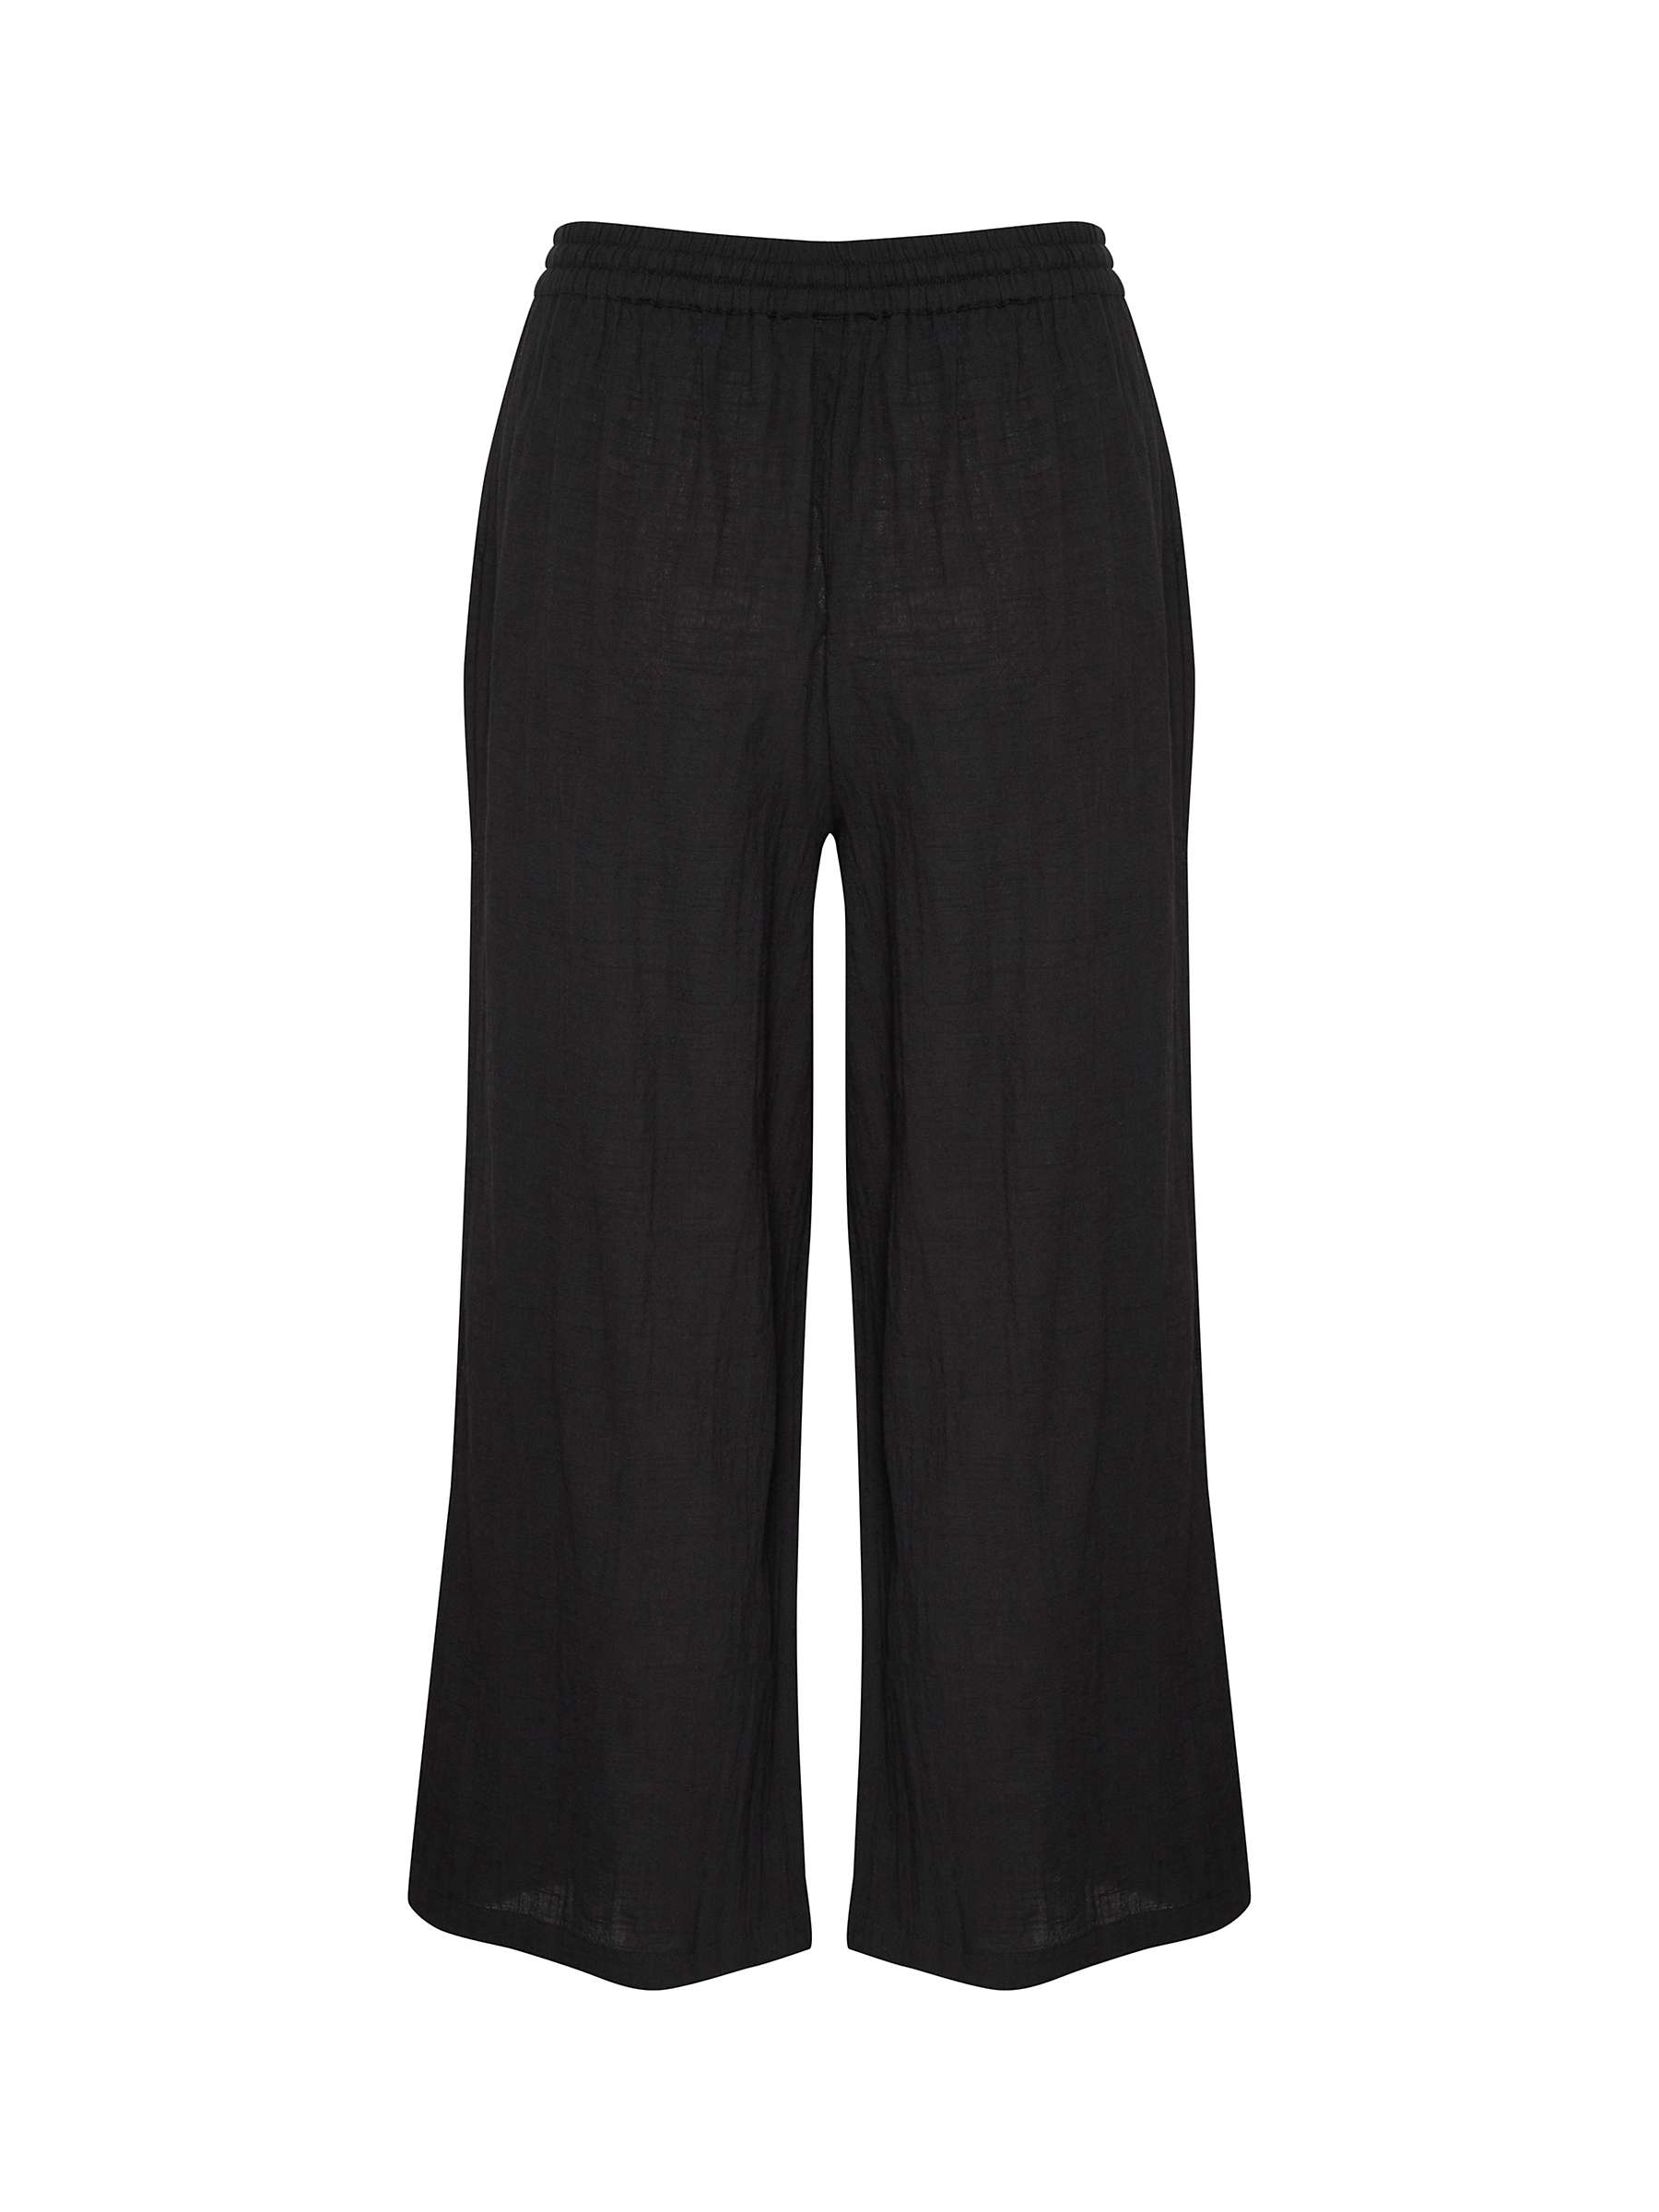 Buy KAFFE Emily Lula Cropped Wide Leg Trousers, Black Online at johnlewis.com